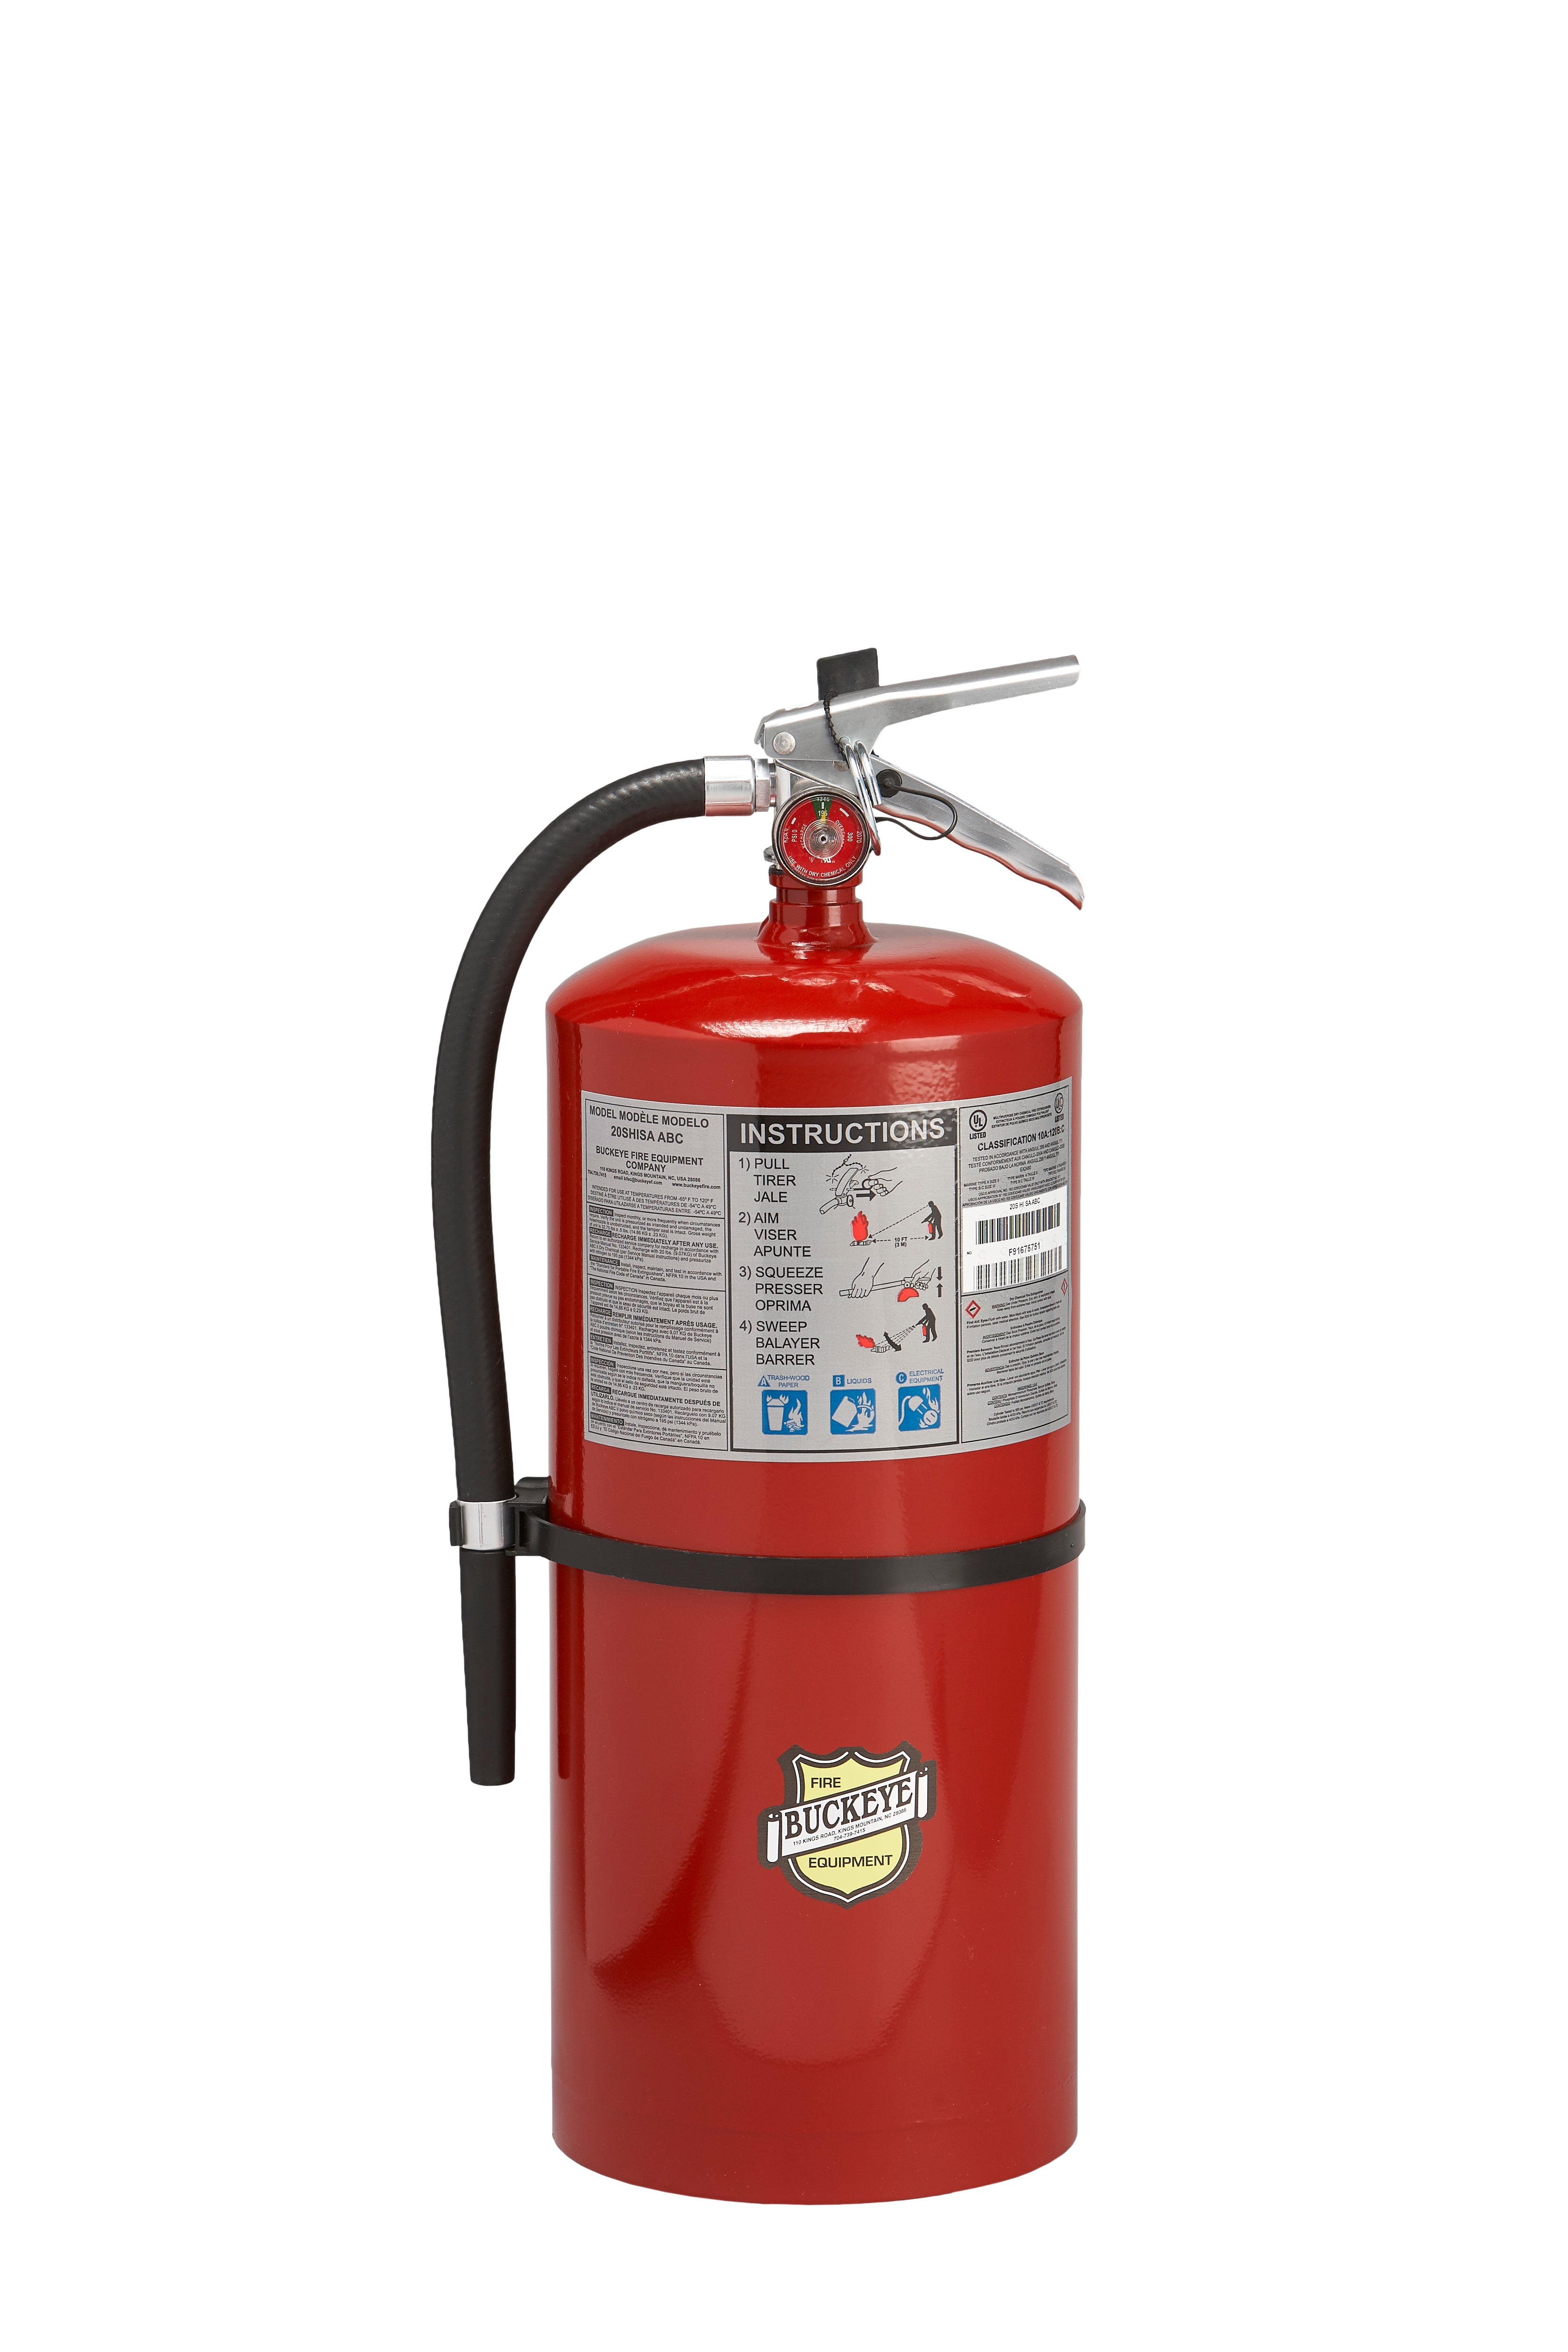 Buckeye 12120 ABC 20lb Dry Chemical Fire Extinguisher